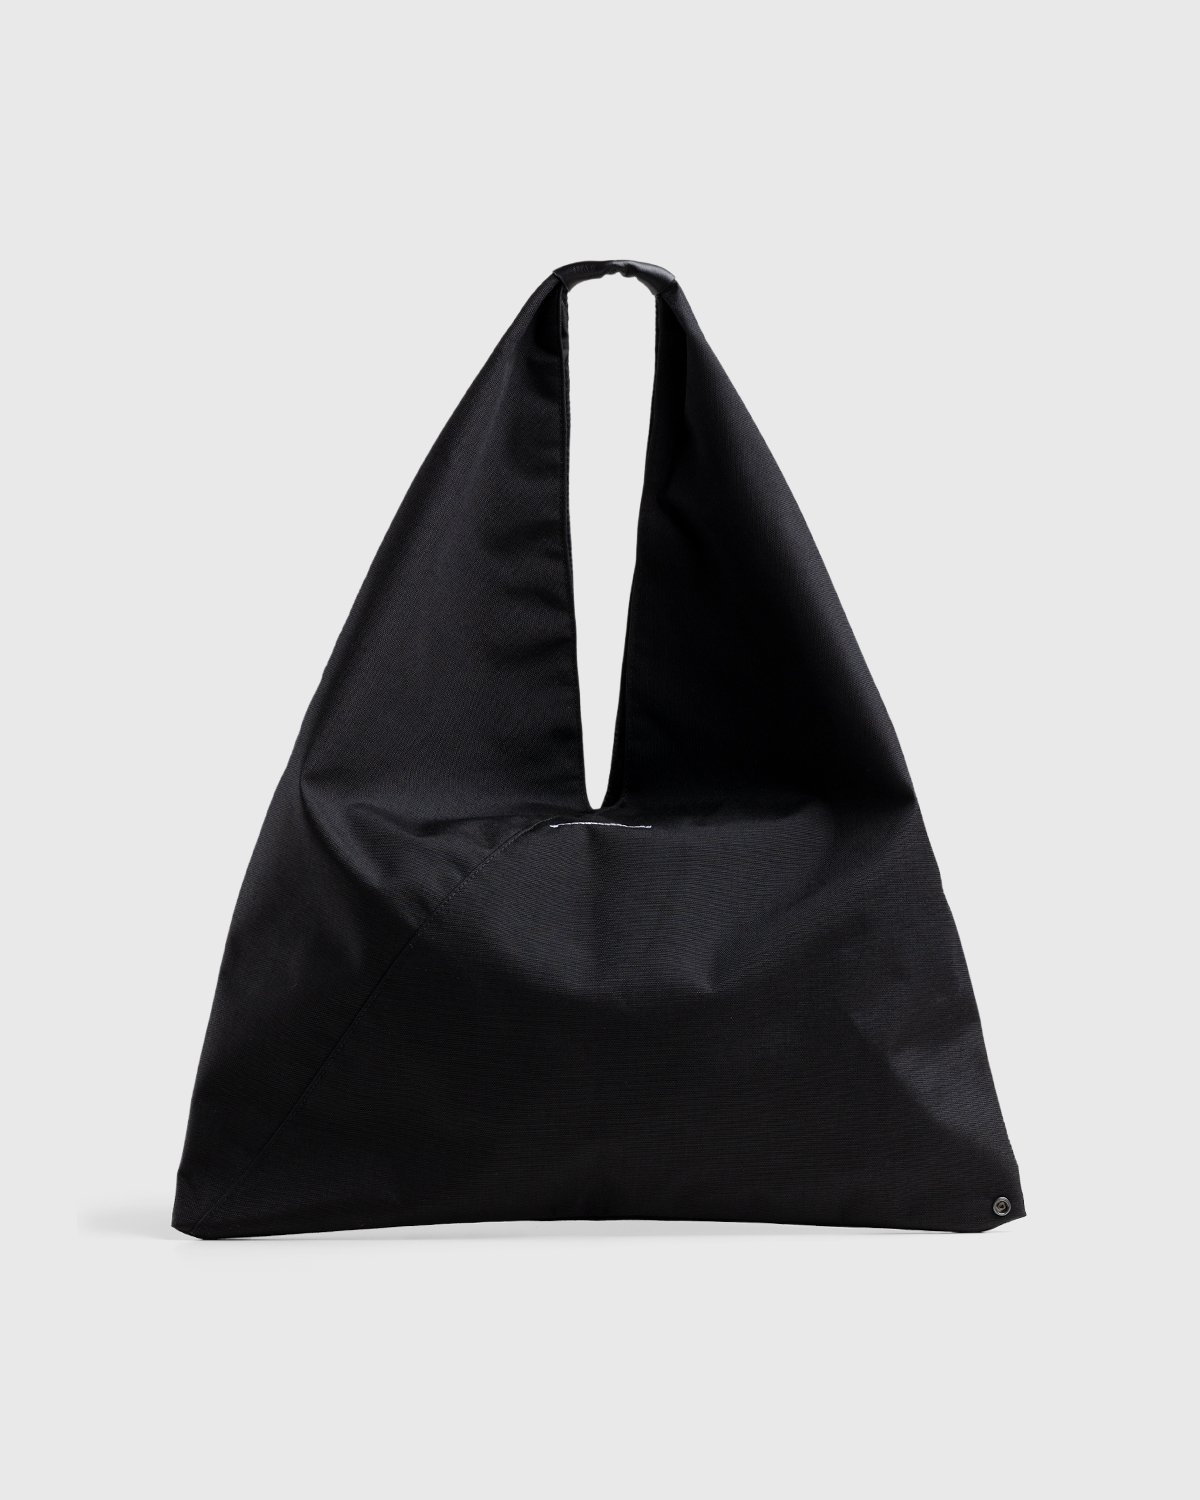 MM6 Maison Margiela x Eastpak - Borsa Shopping Bag Black - Accessories - Black - Image 2